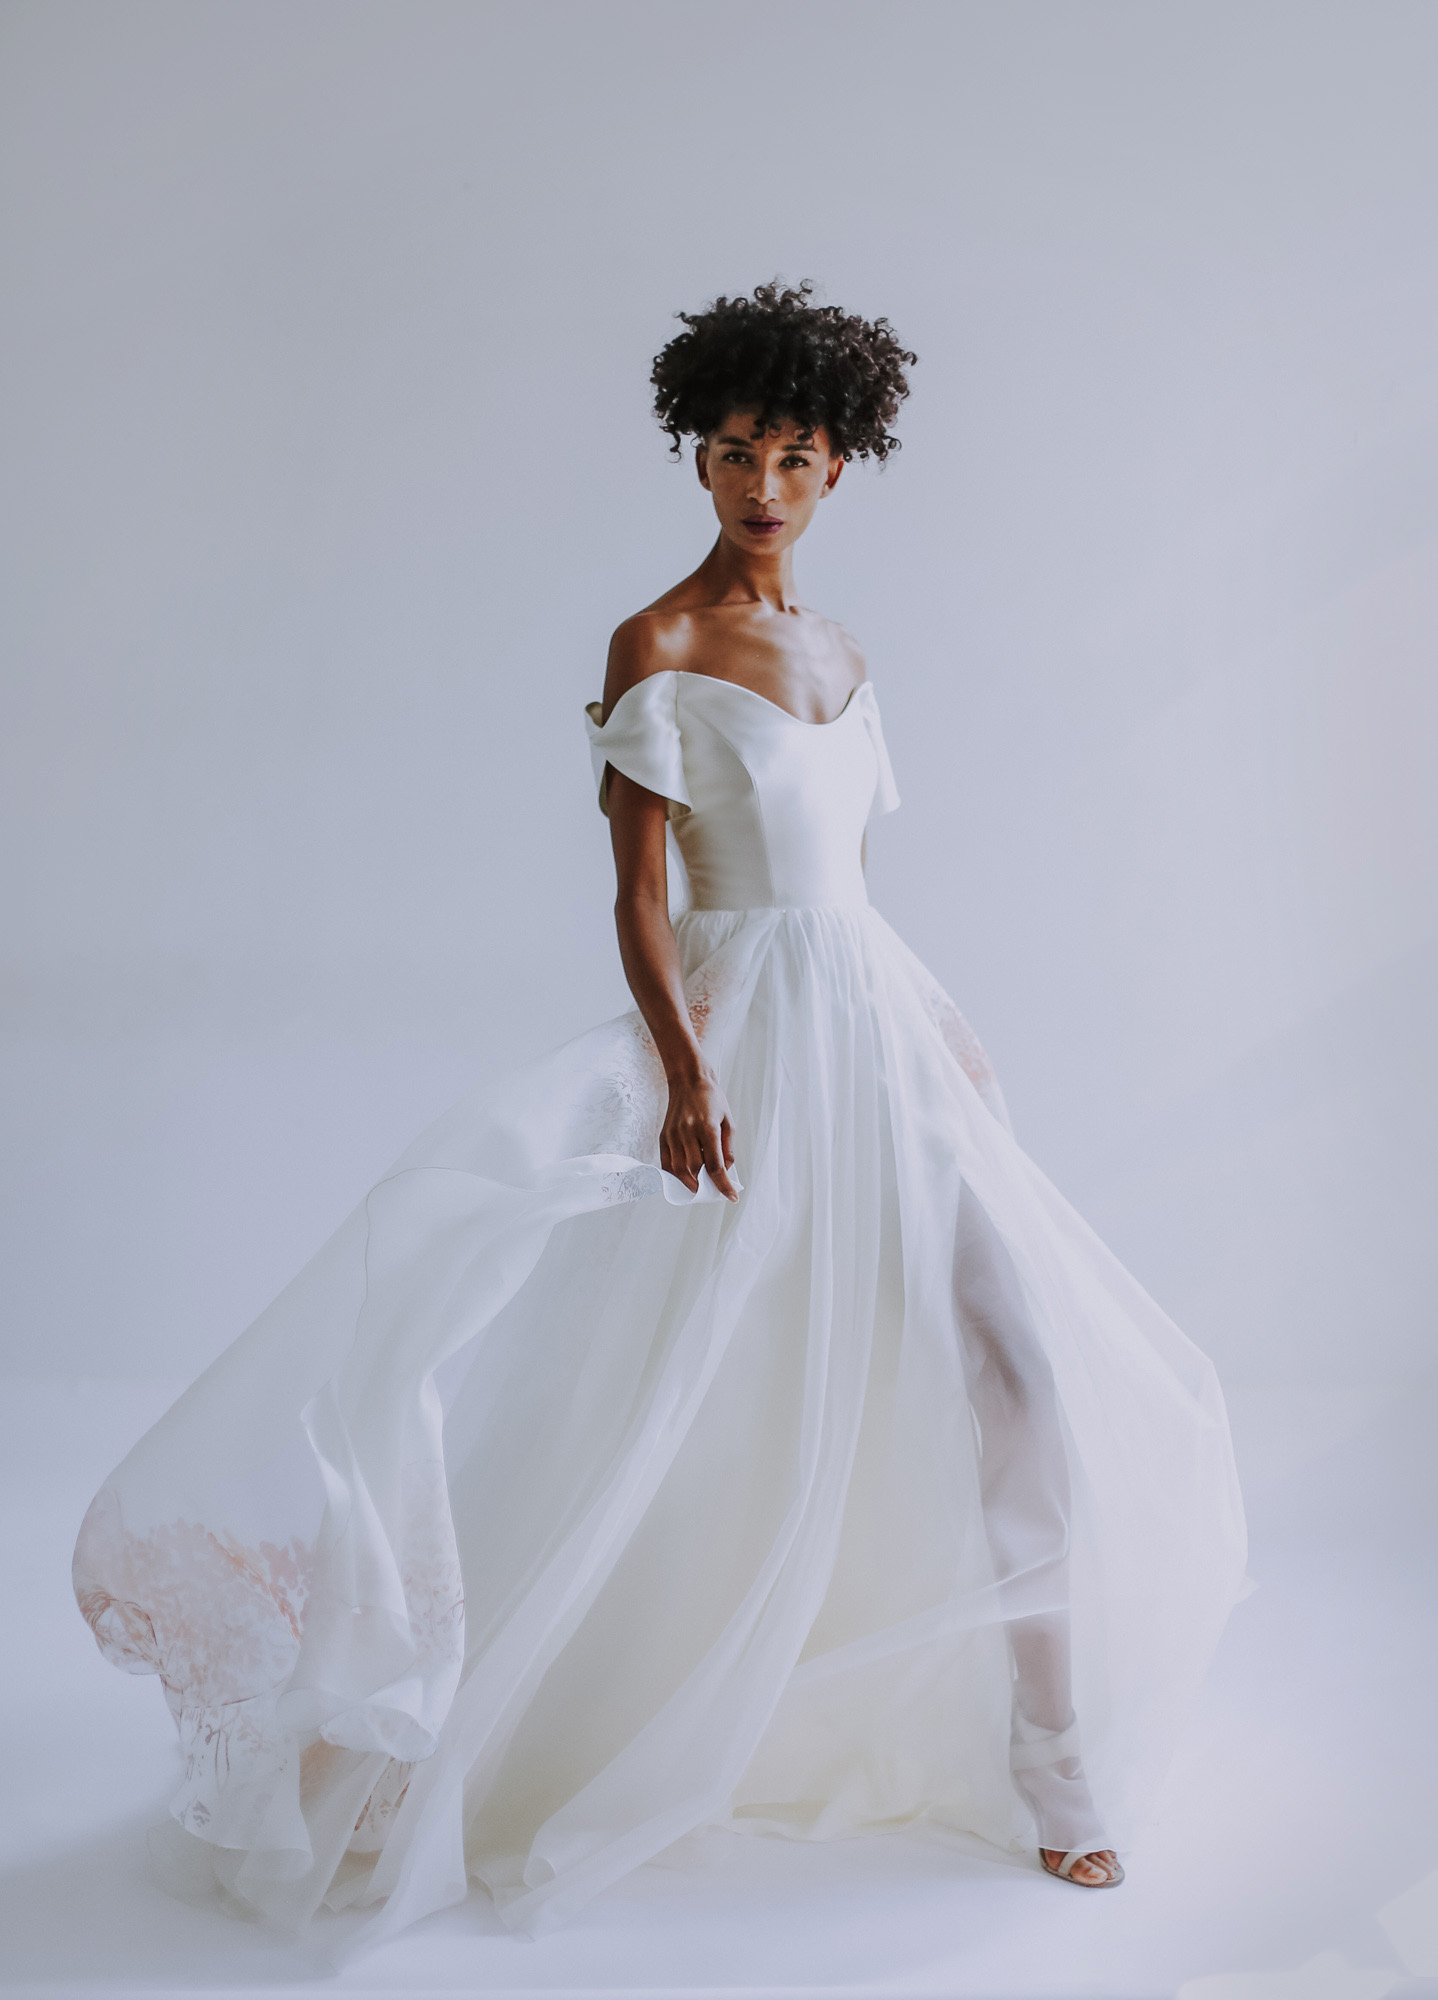 leanne-marshall-wedding-gown-5.jpg